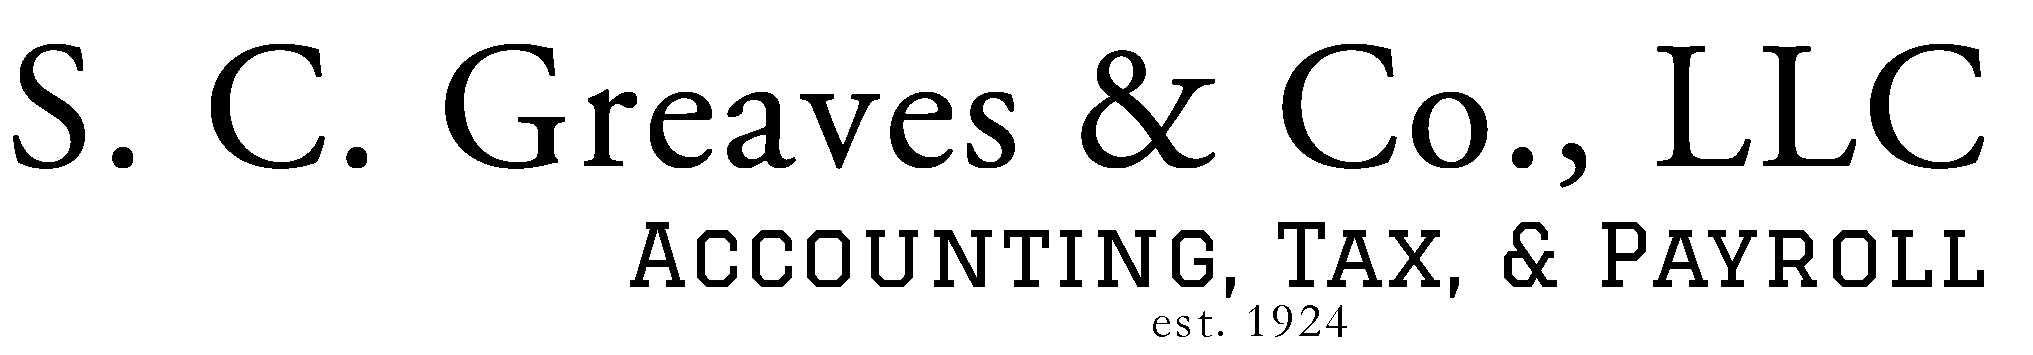 S.C.Greaves & Co., LLC